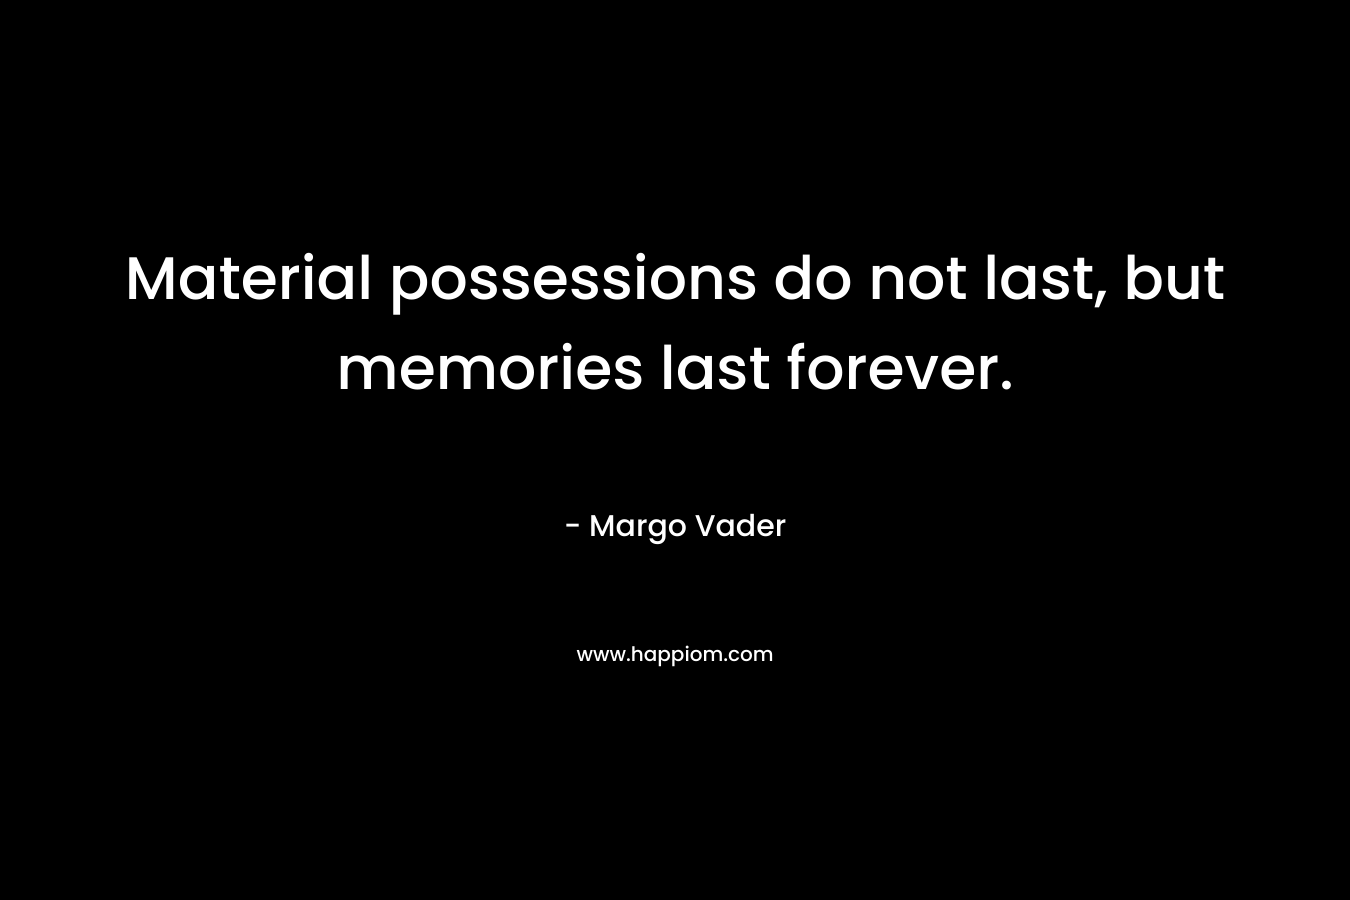 Material possessions do not last, but memories last forever.